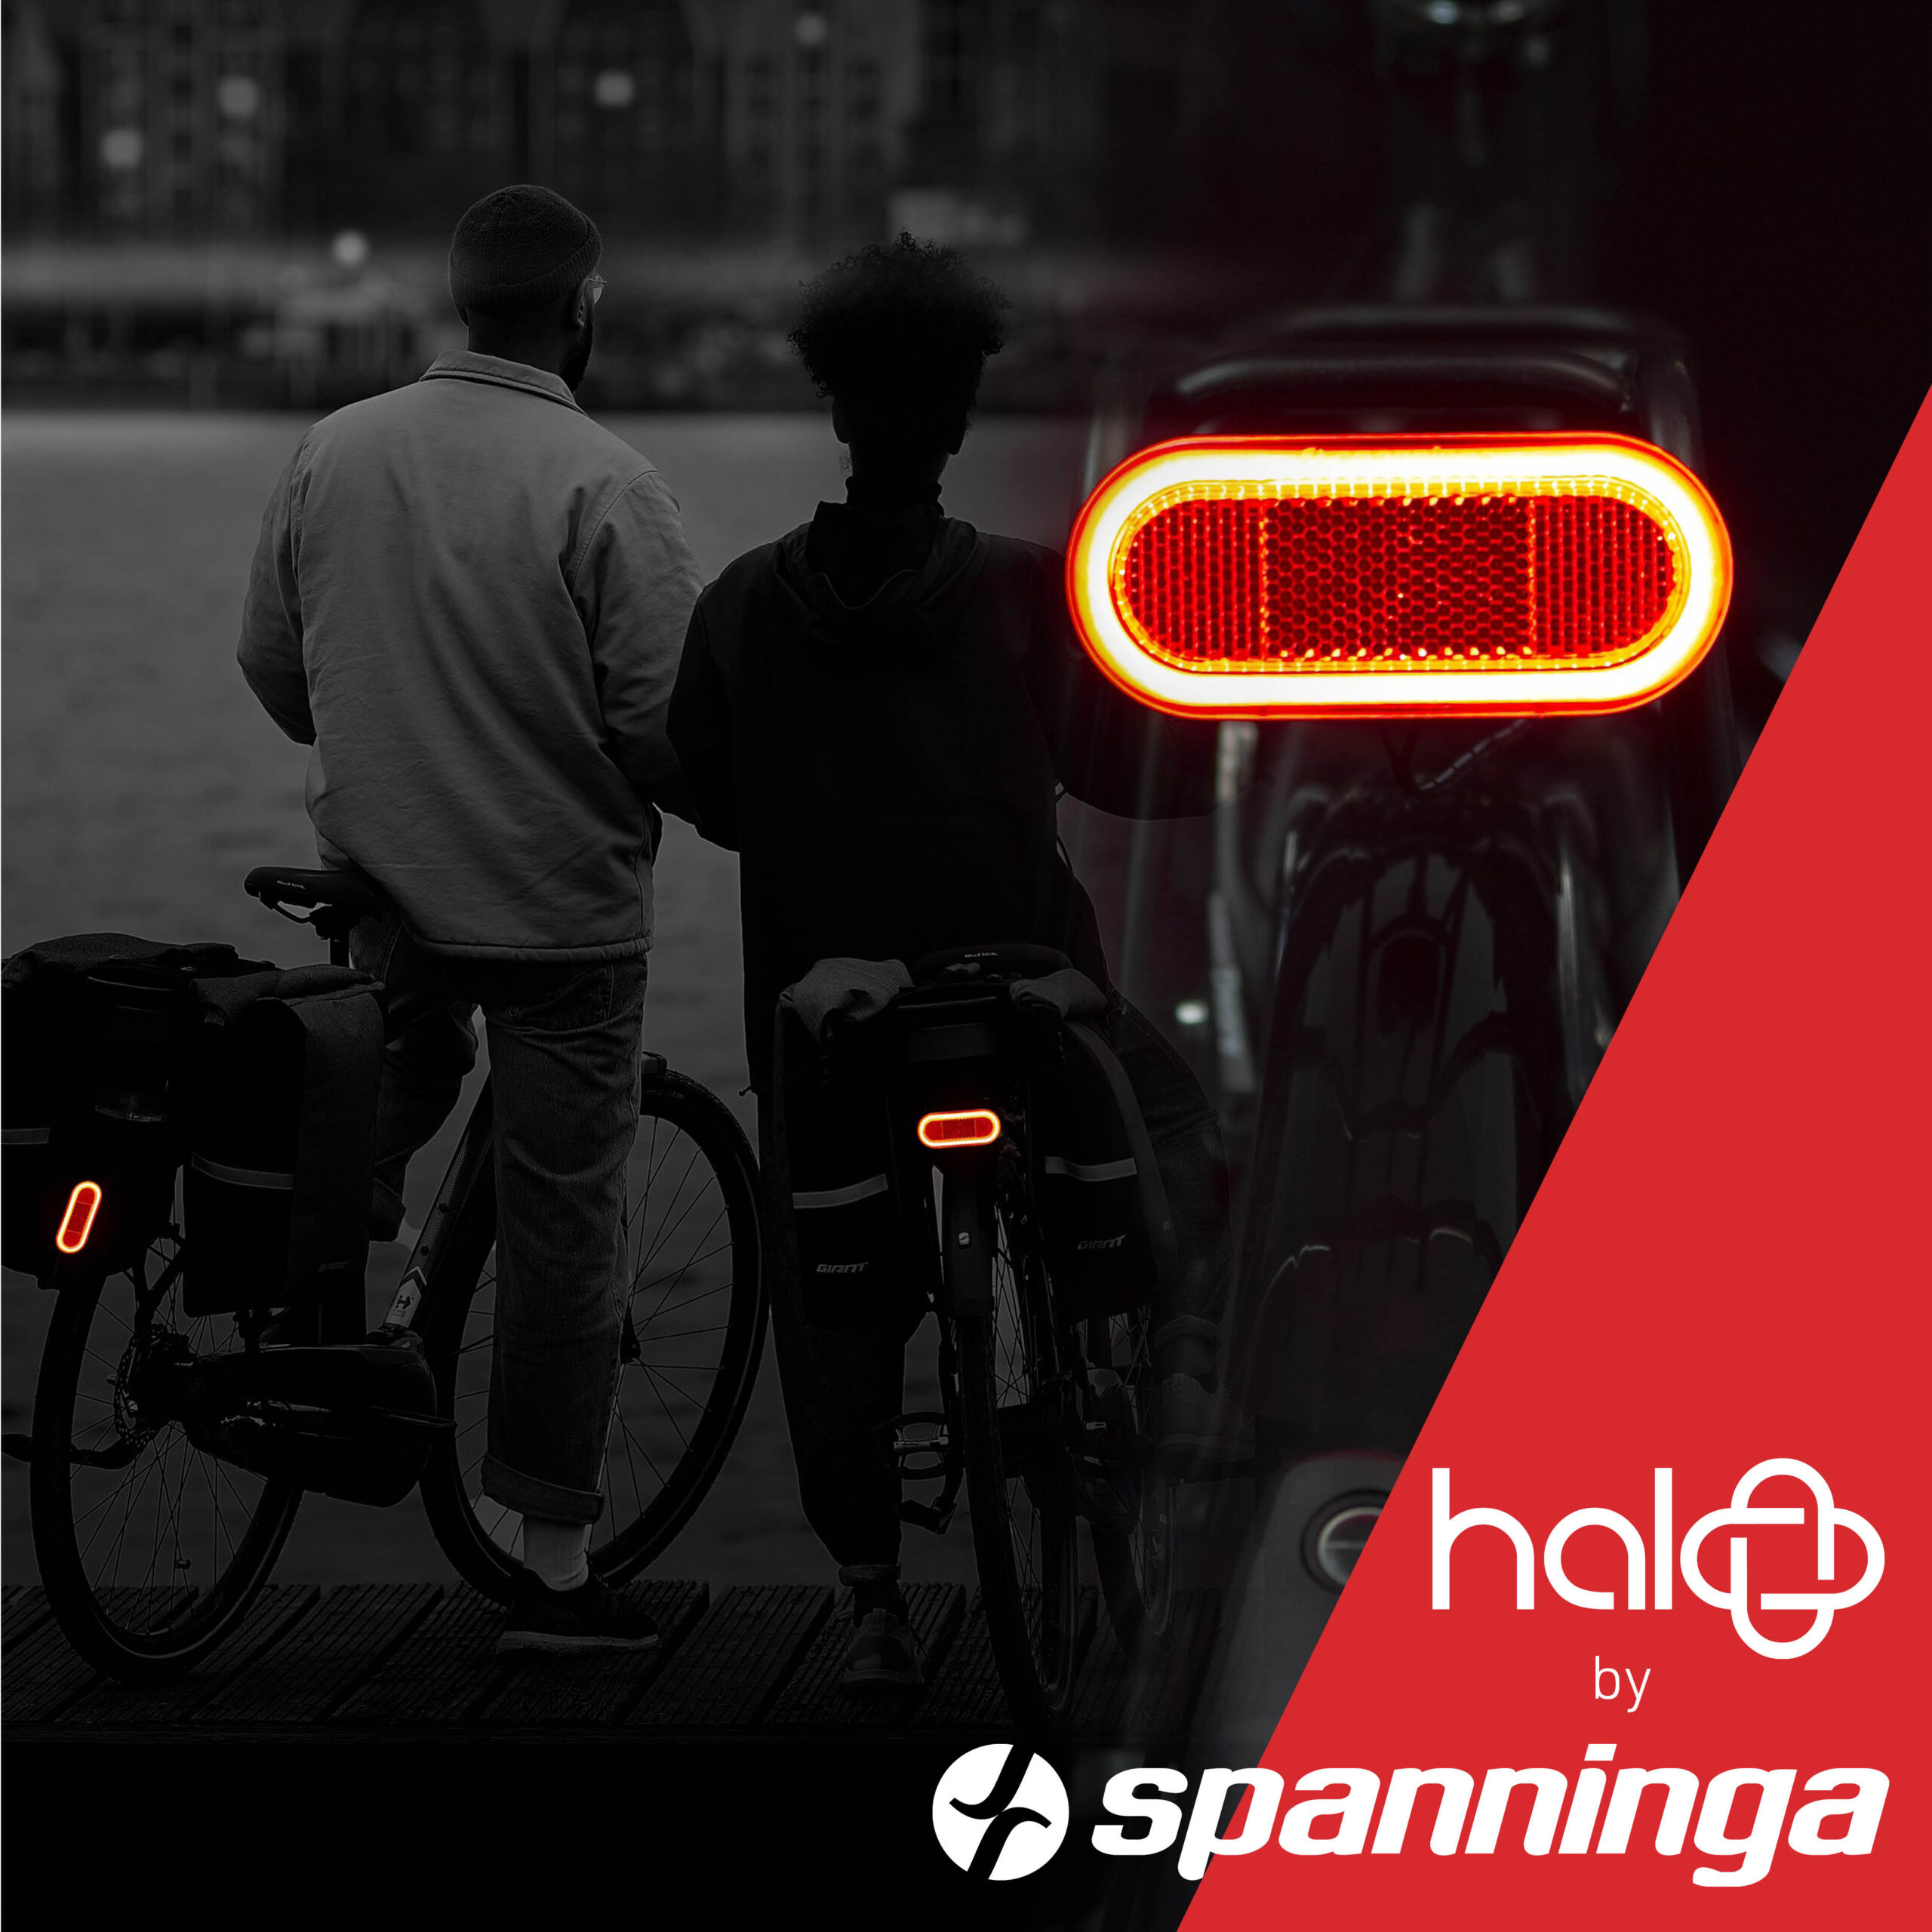 SPANNINGA introduces the revolutionary HALO-series